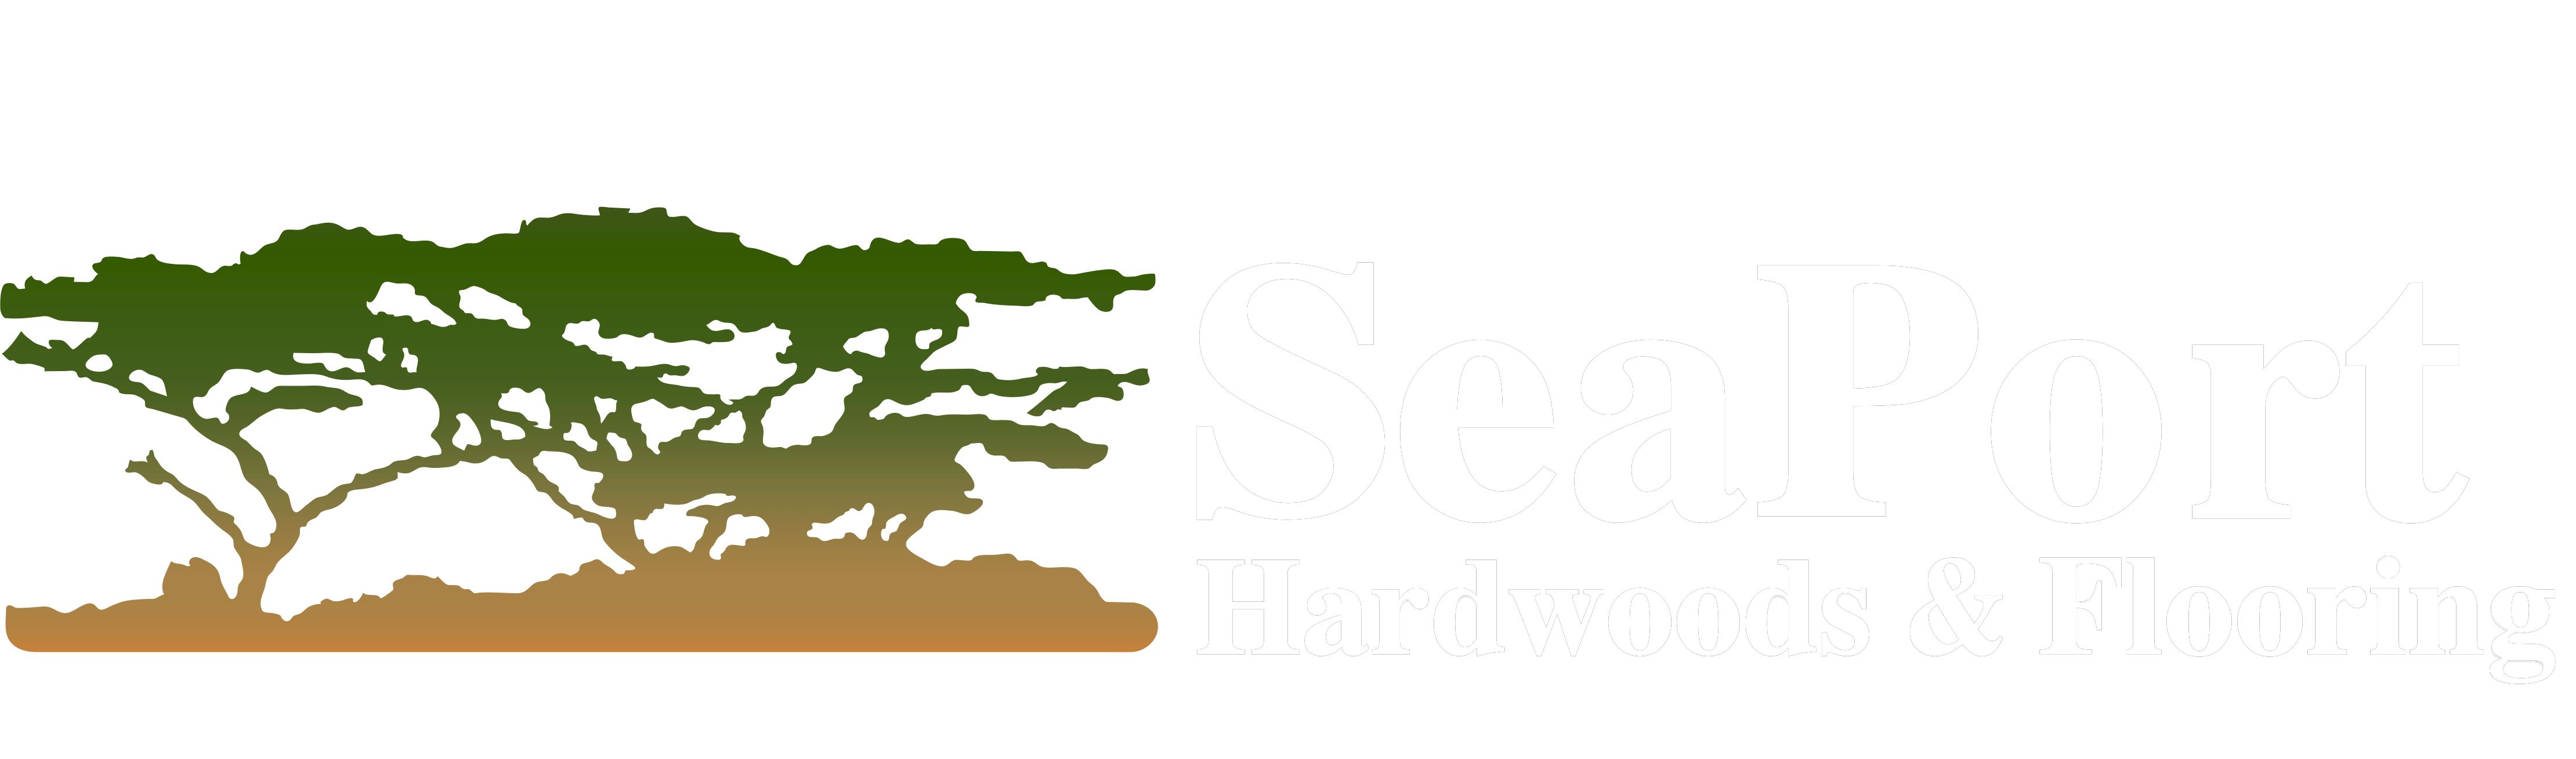 SeaPort Hardwood & Flooring Logo